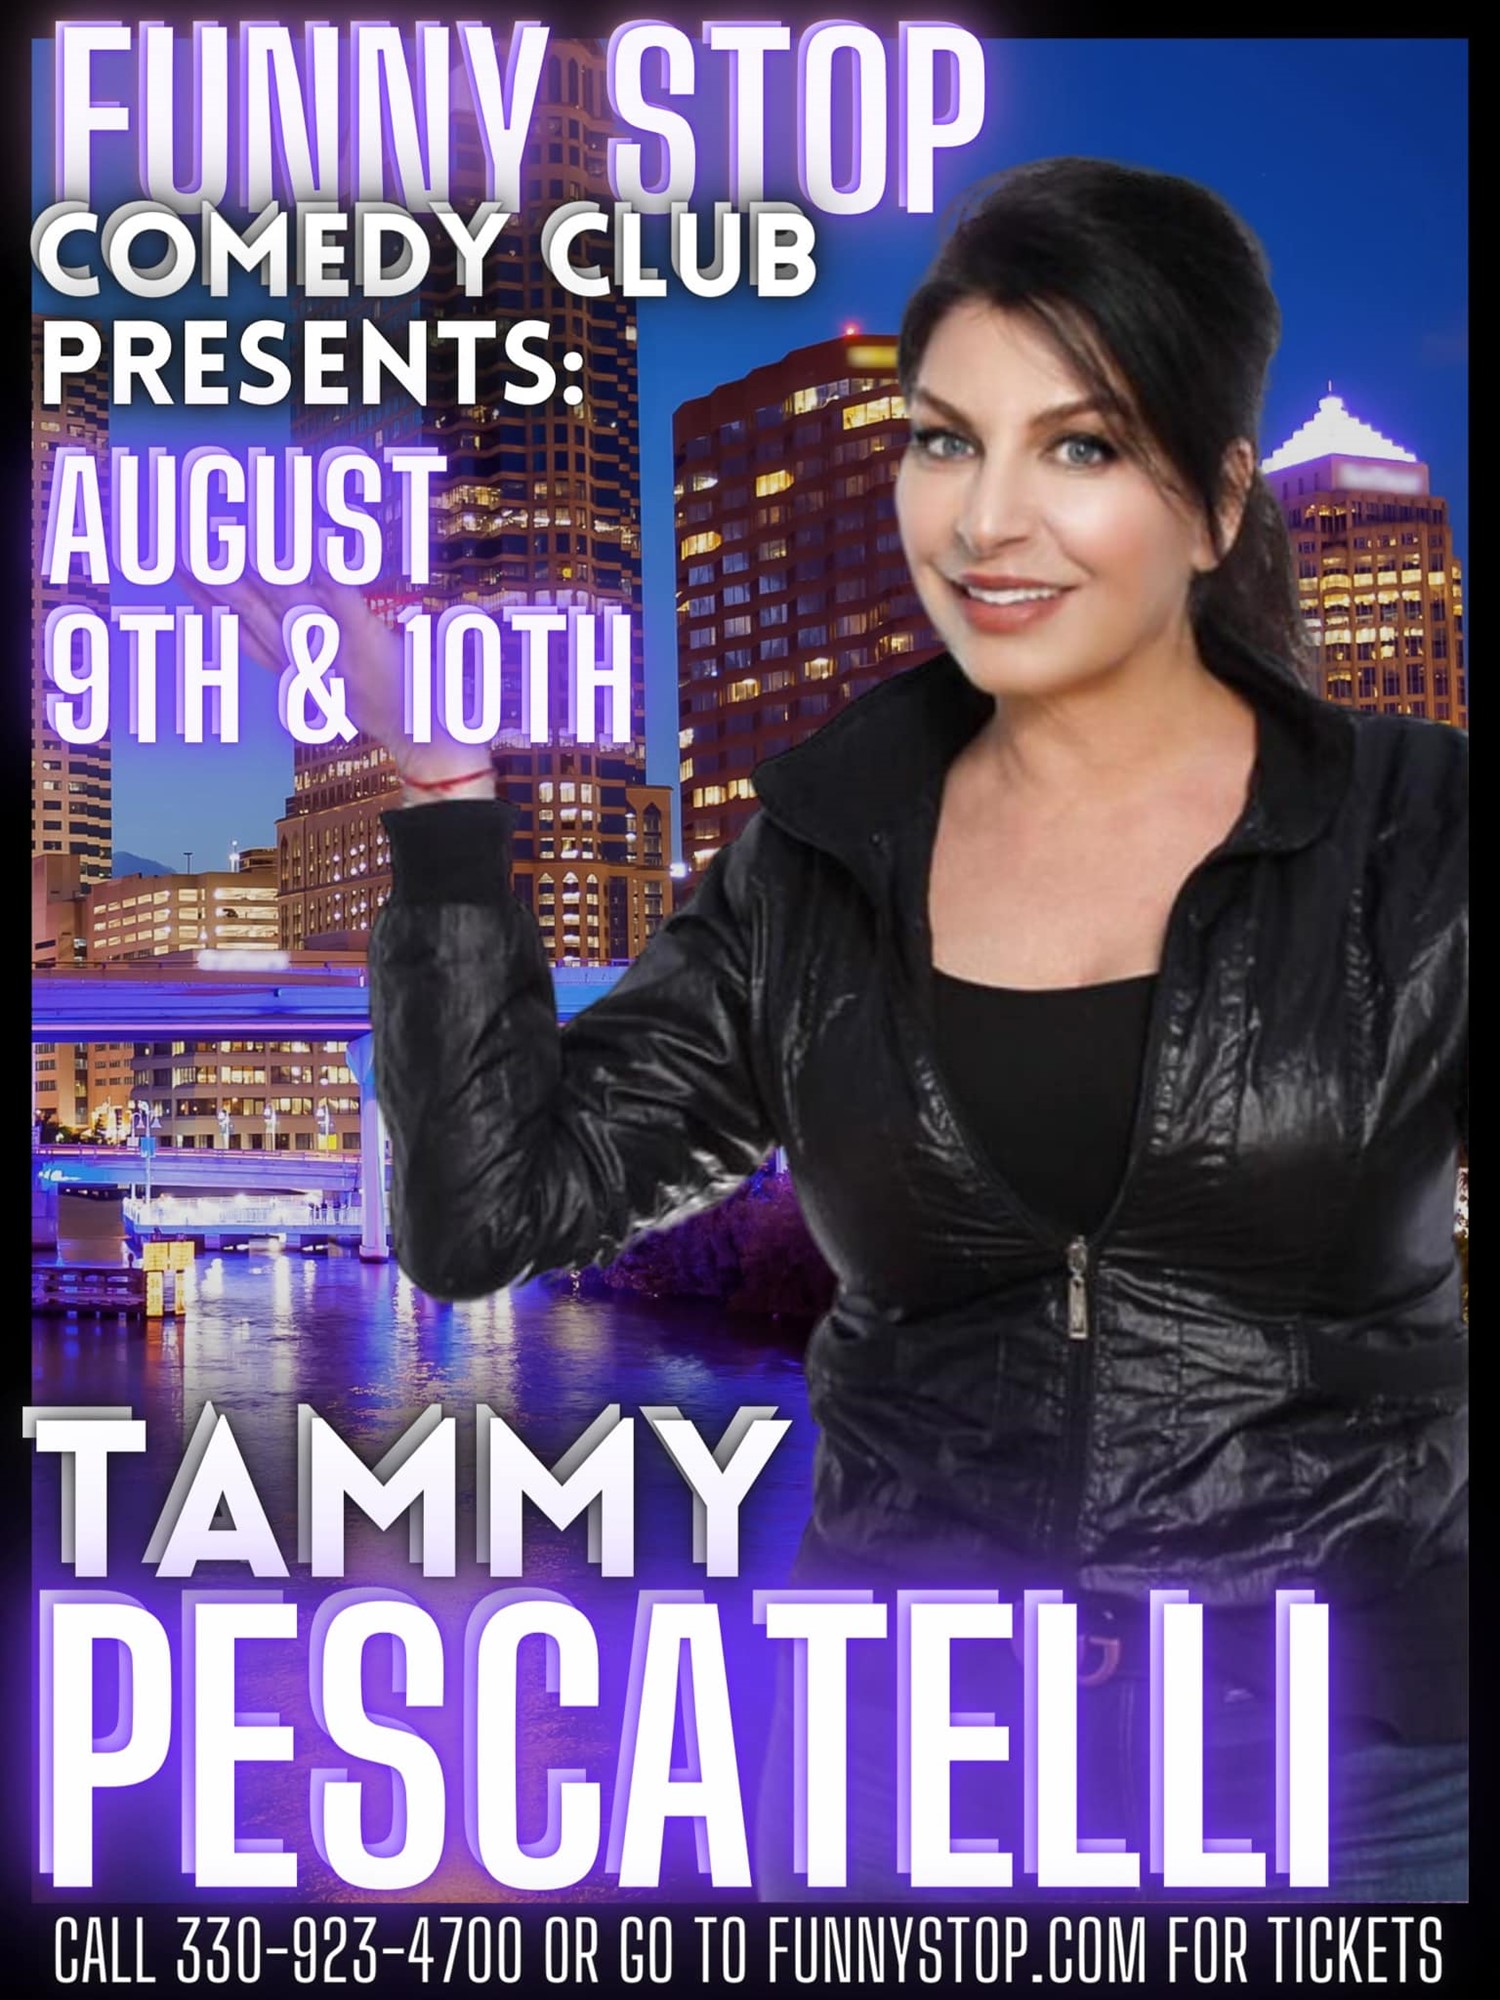 Tammy Pescatelli - Fri. 7:30 Show Funny Stop Comedy Club on ago. 09, 19:30@Funny Stop Comedy Club - Compra entradas y obtén información enFunny Stop funnystop.online